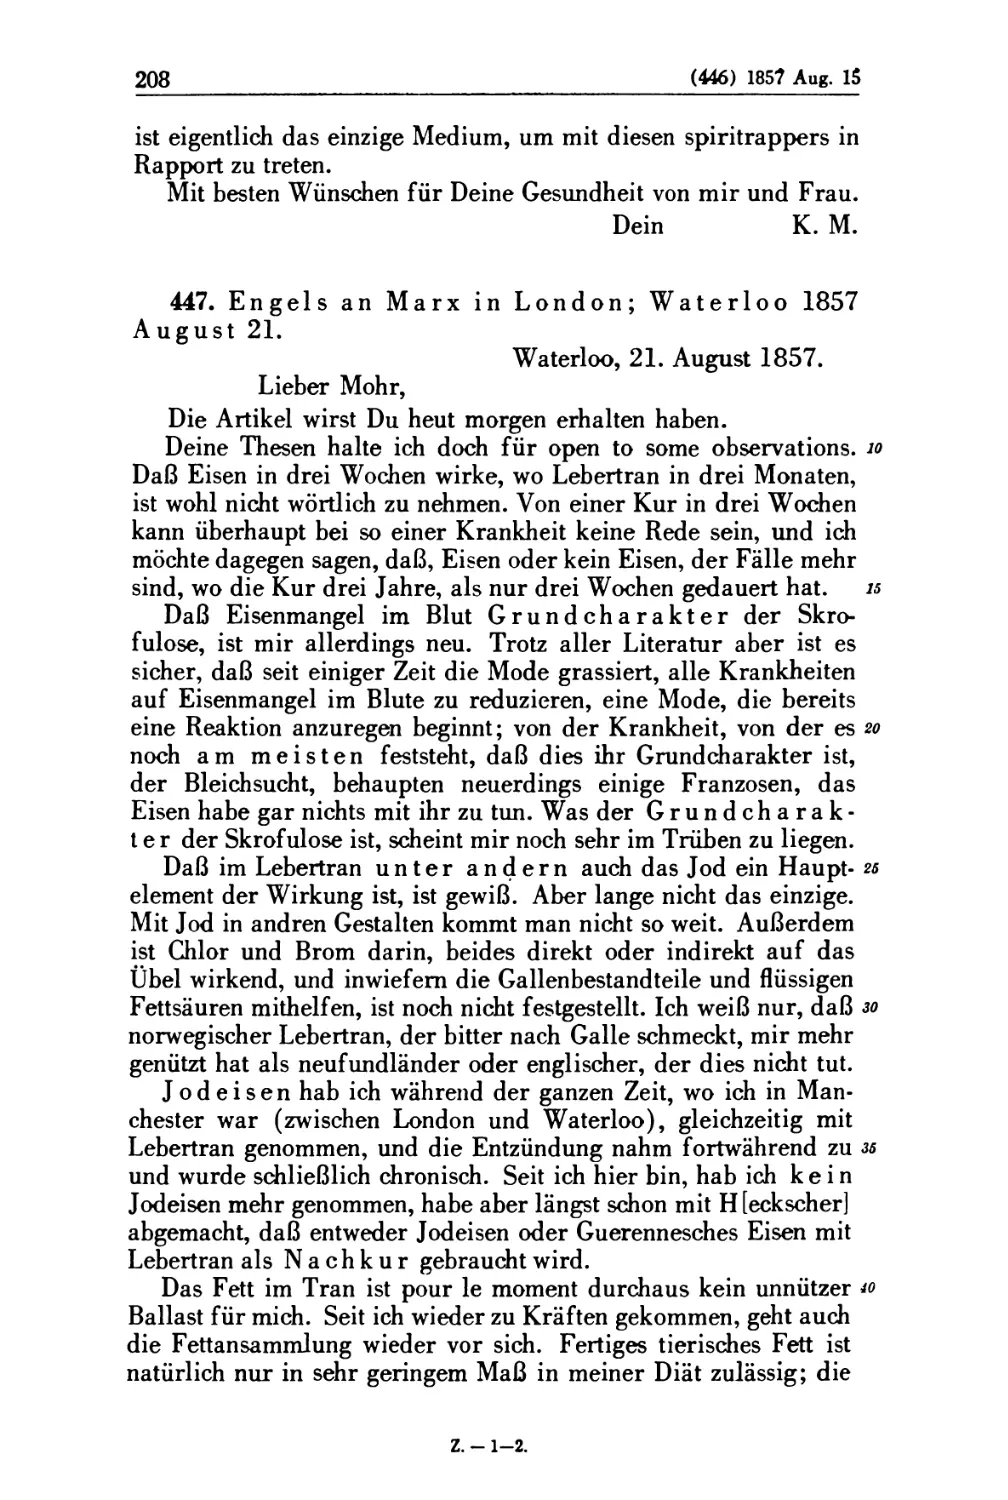 447. Engels an Marx in London; Waterloo 1857 August 21